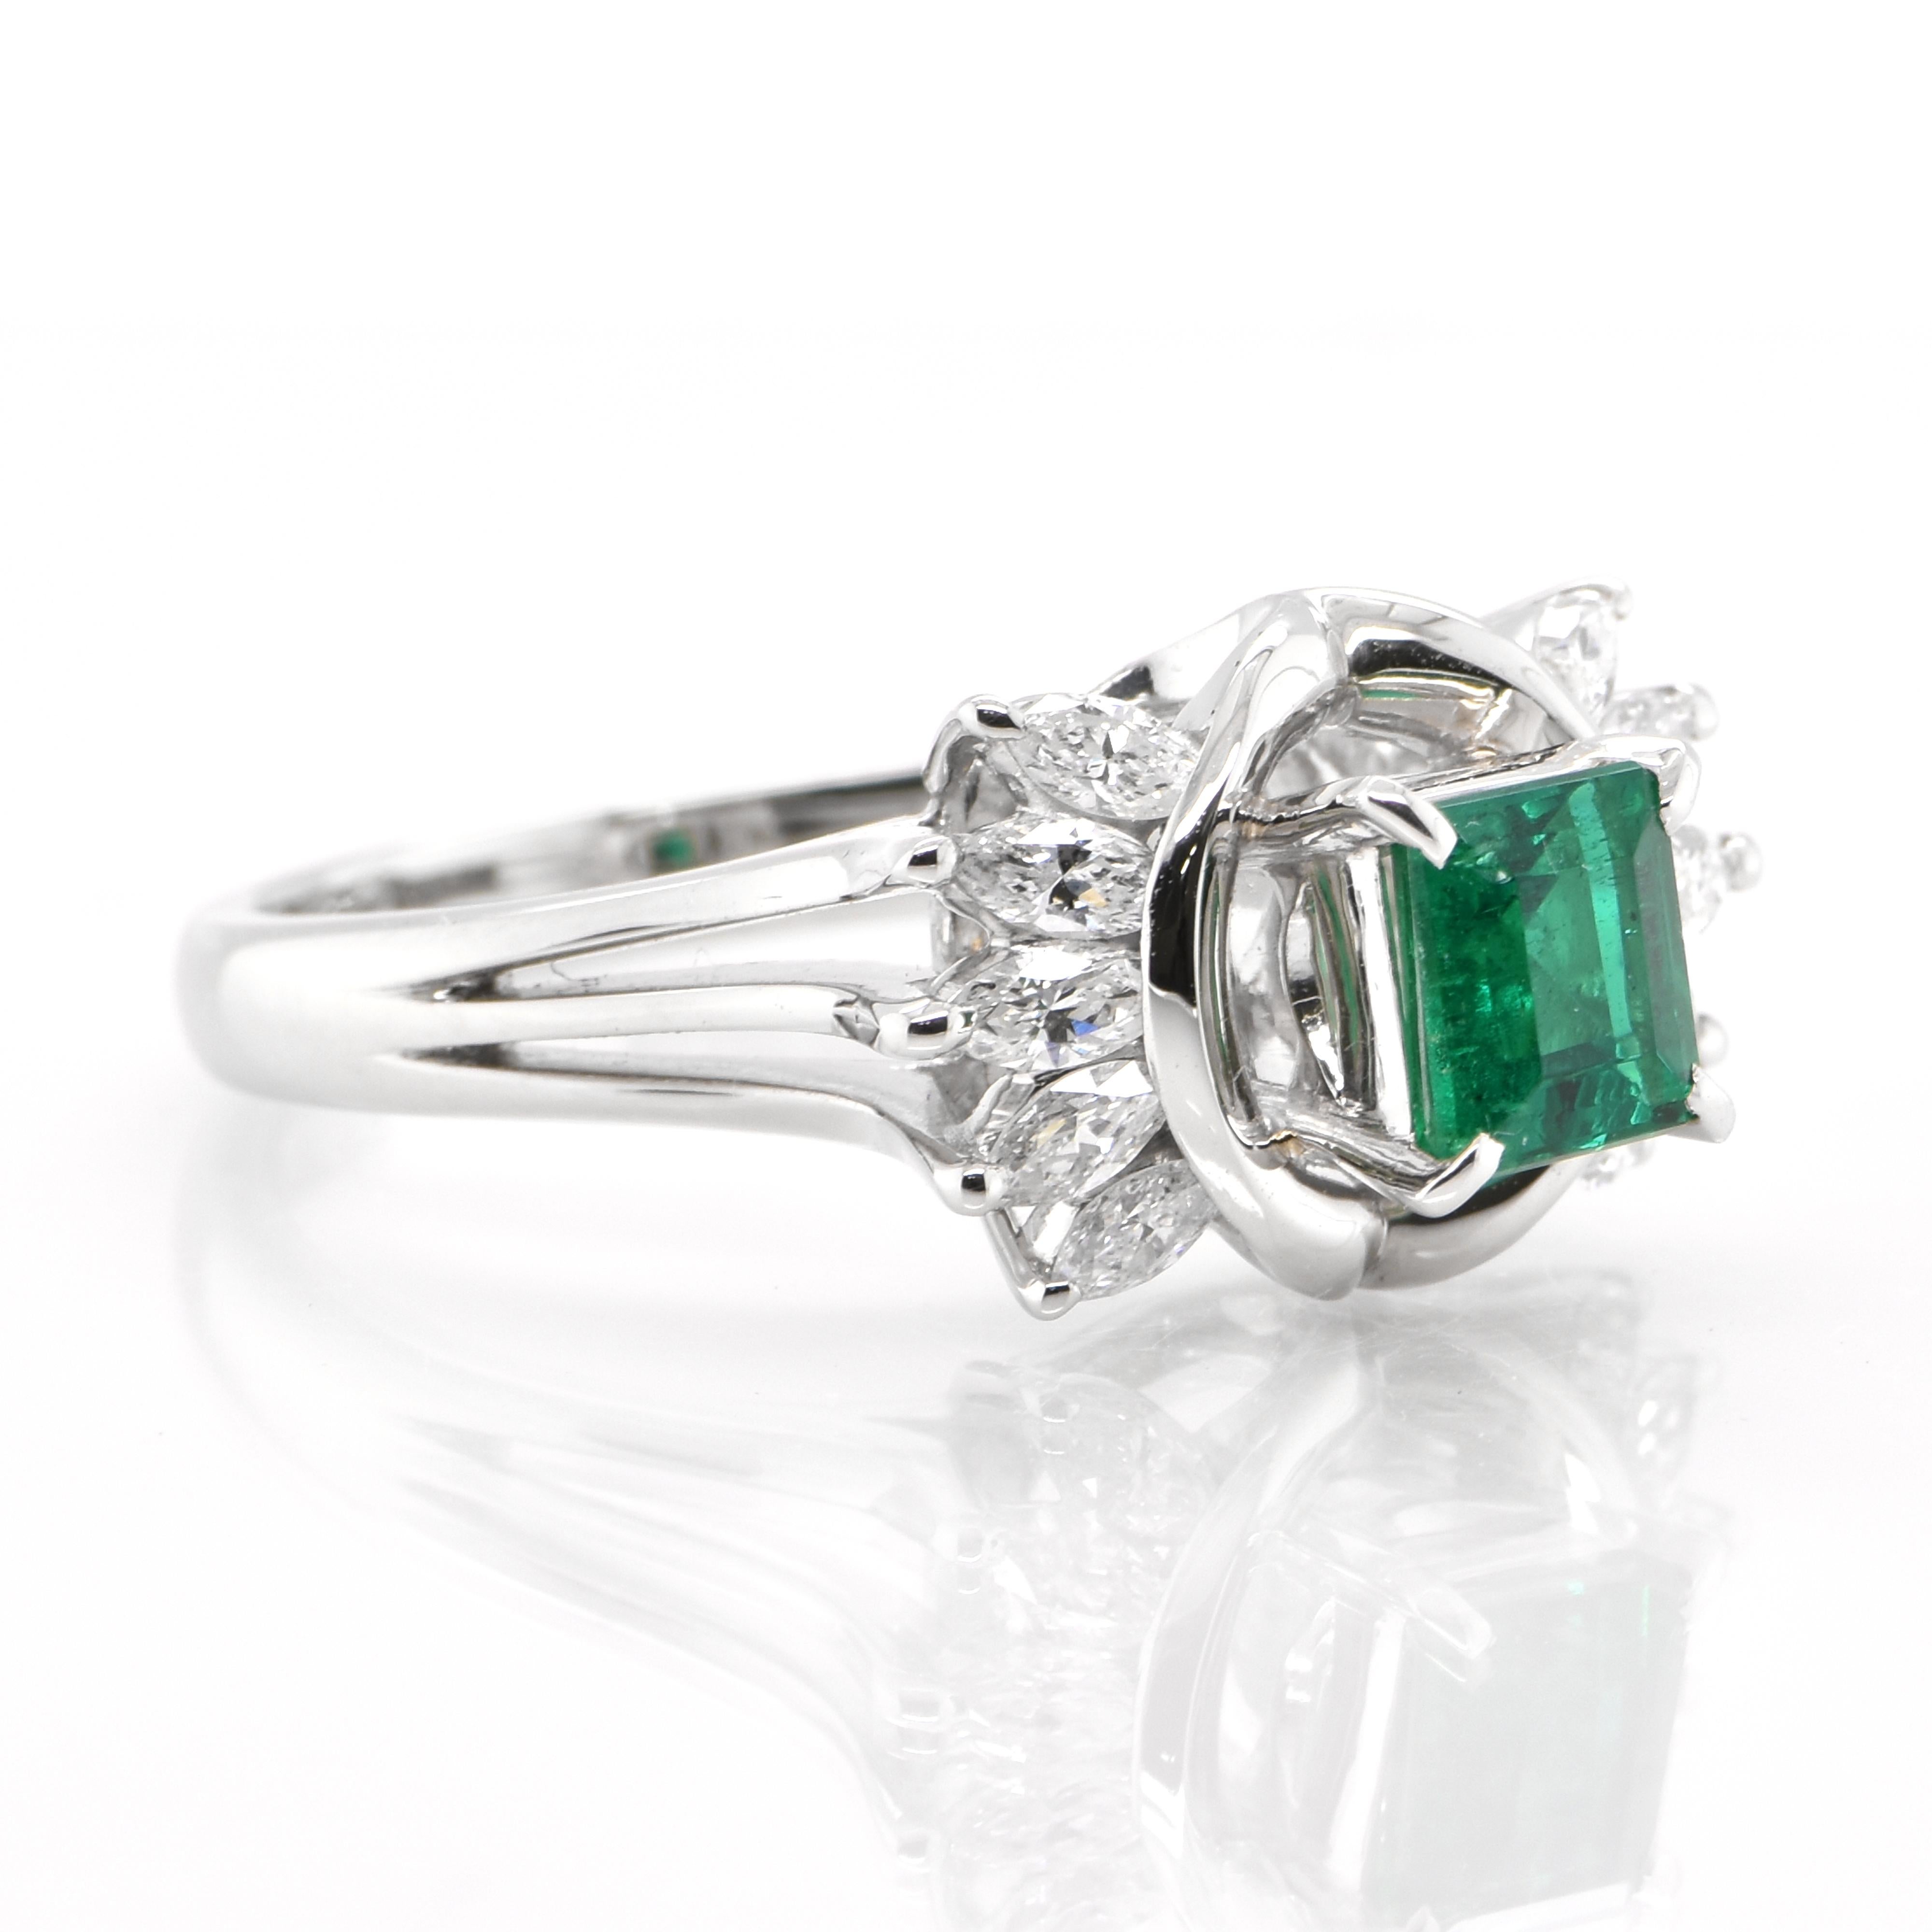 Modern 0.73 Carat Natural Emerald and Diamond Cocktail Ring Set in Platinum